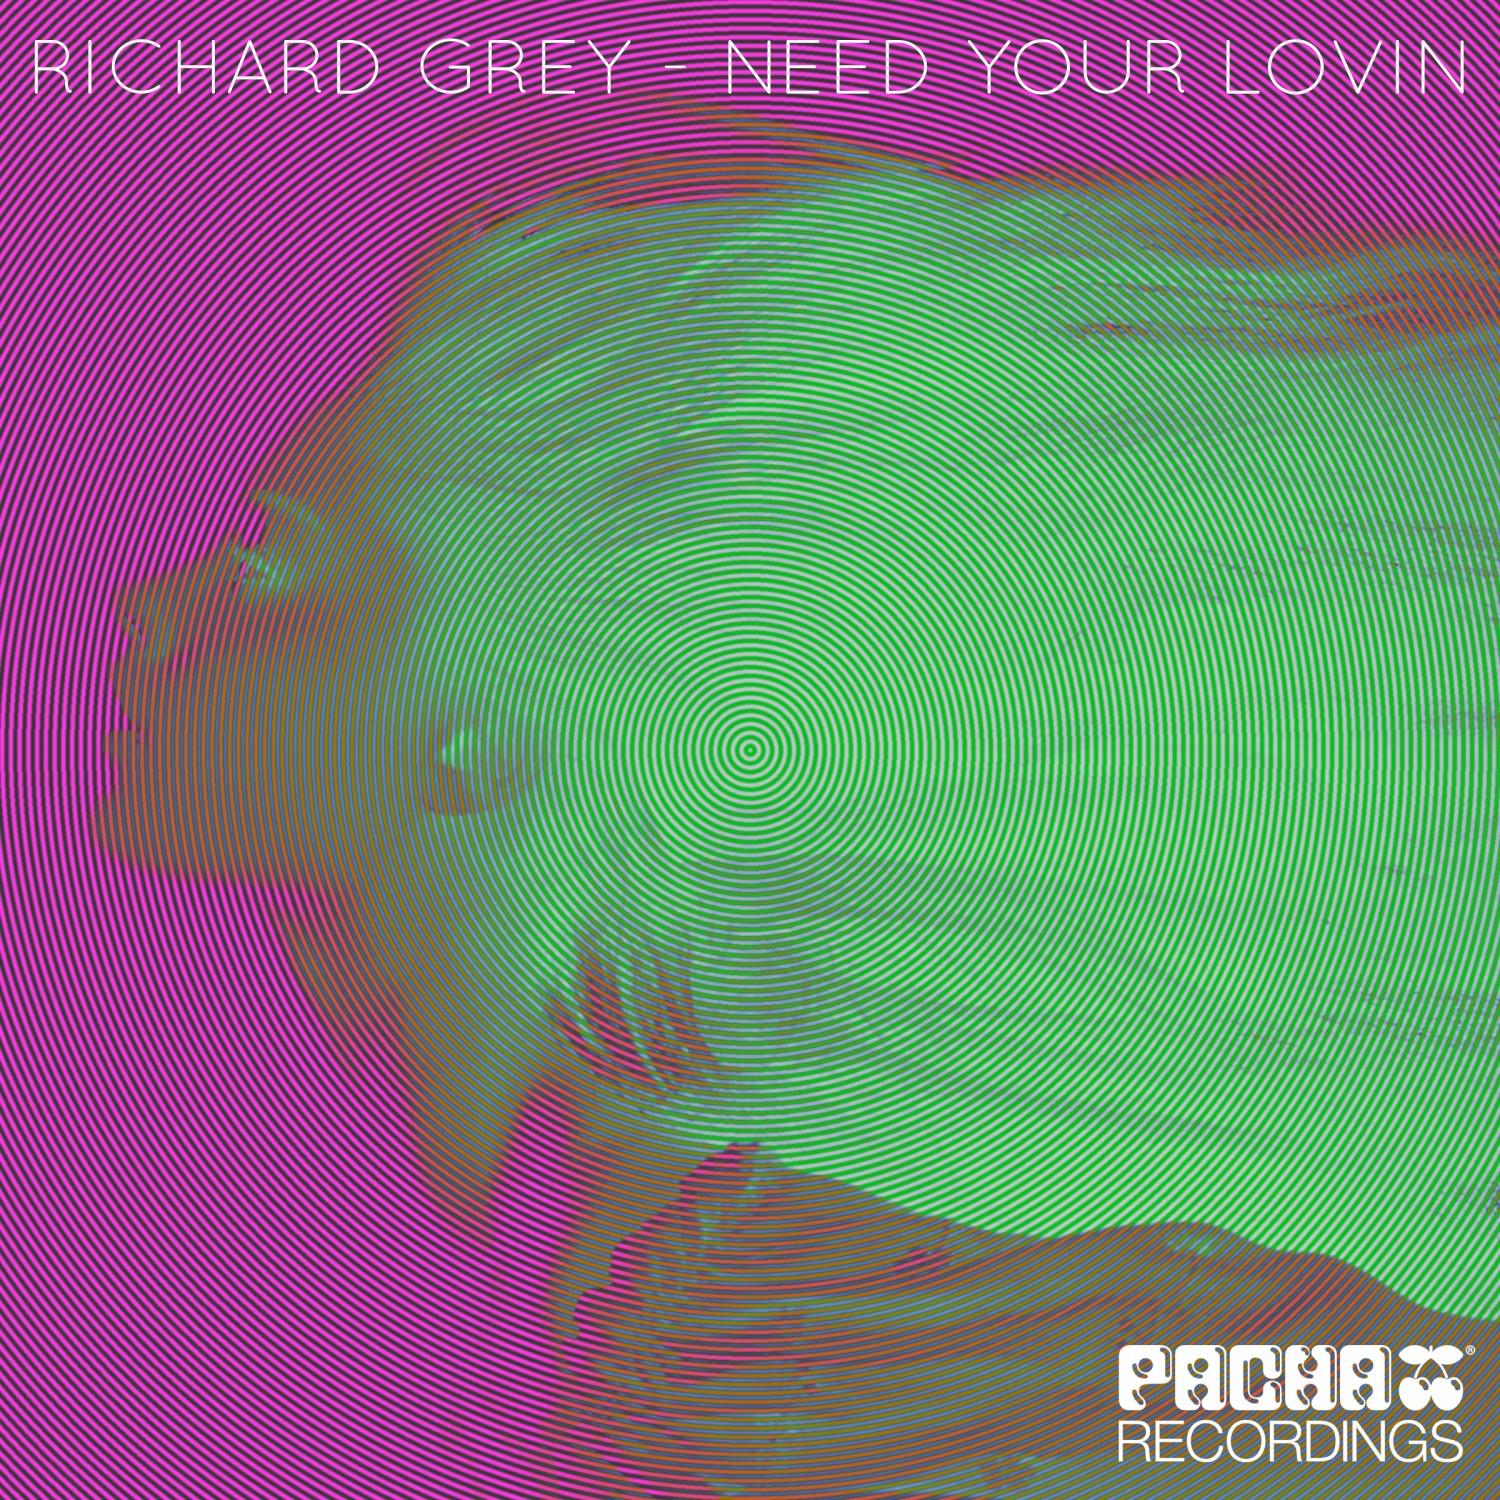 Need Your Lovin (Frank Caro & Alemany Remix)